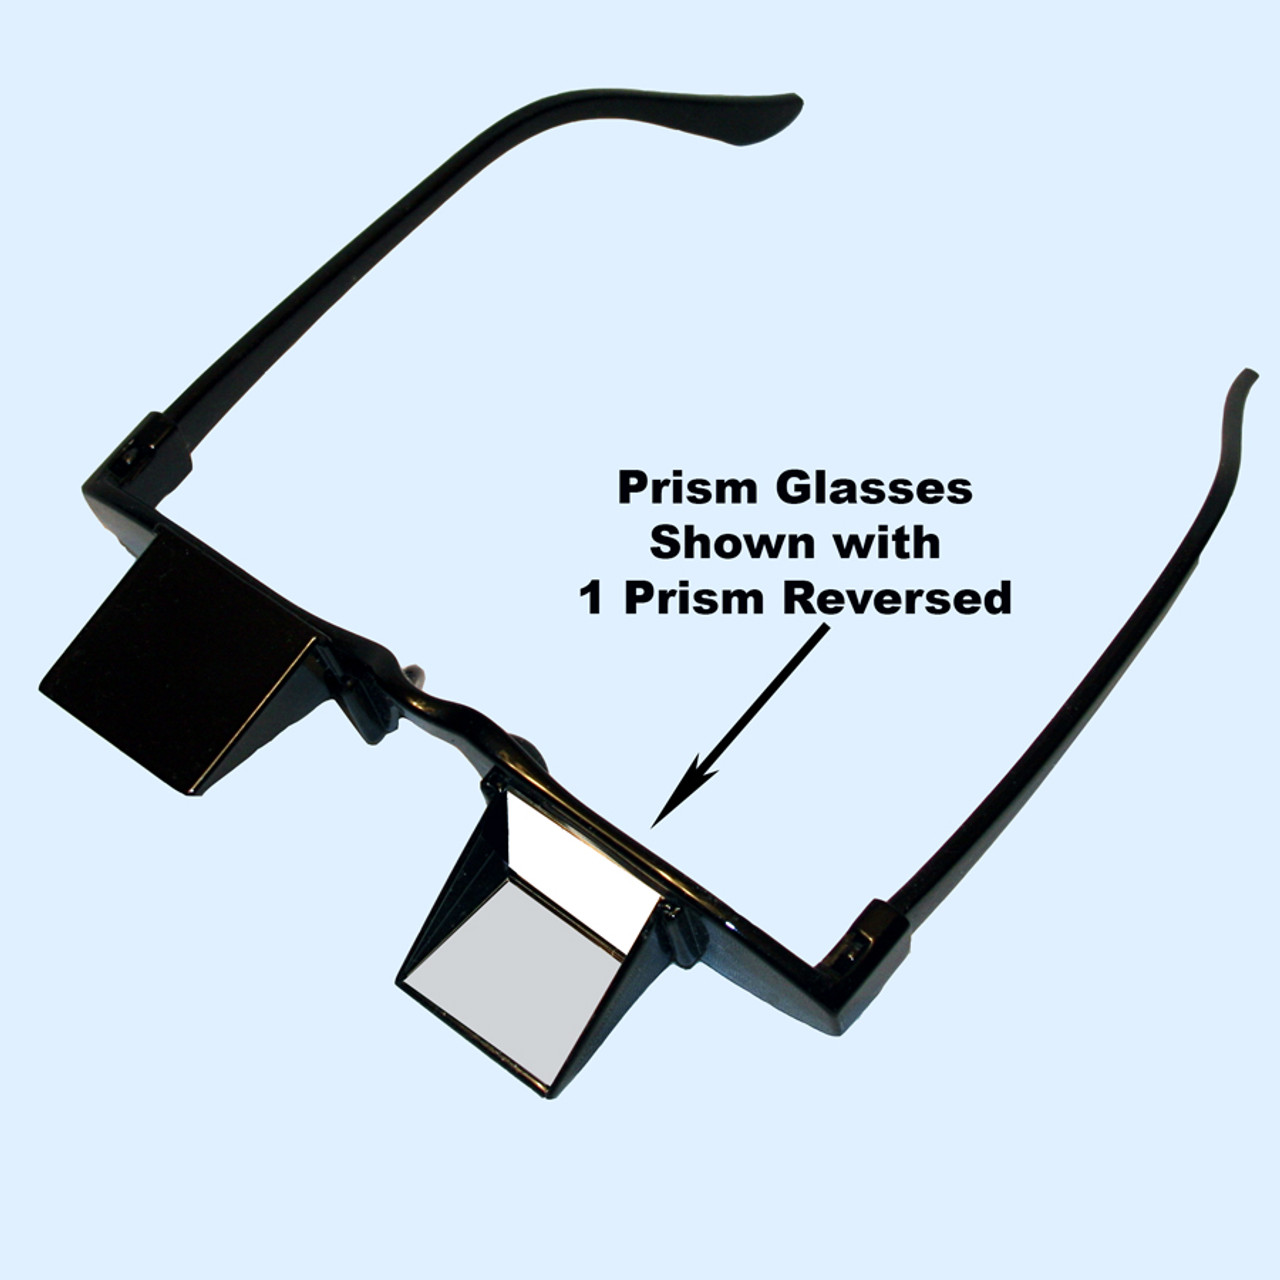 MRI Prism Glasses